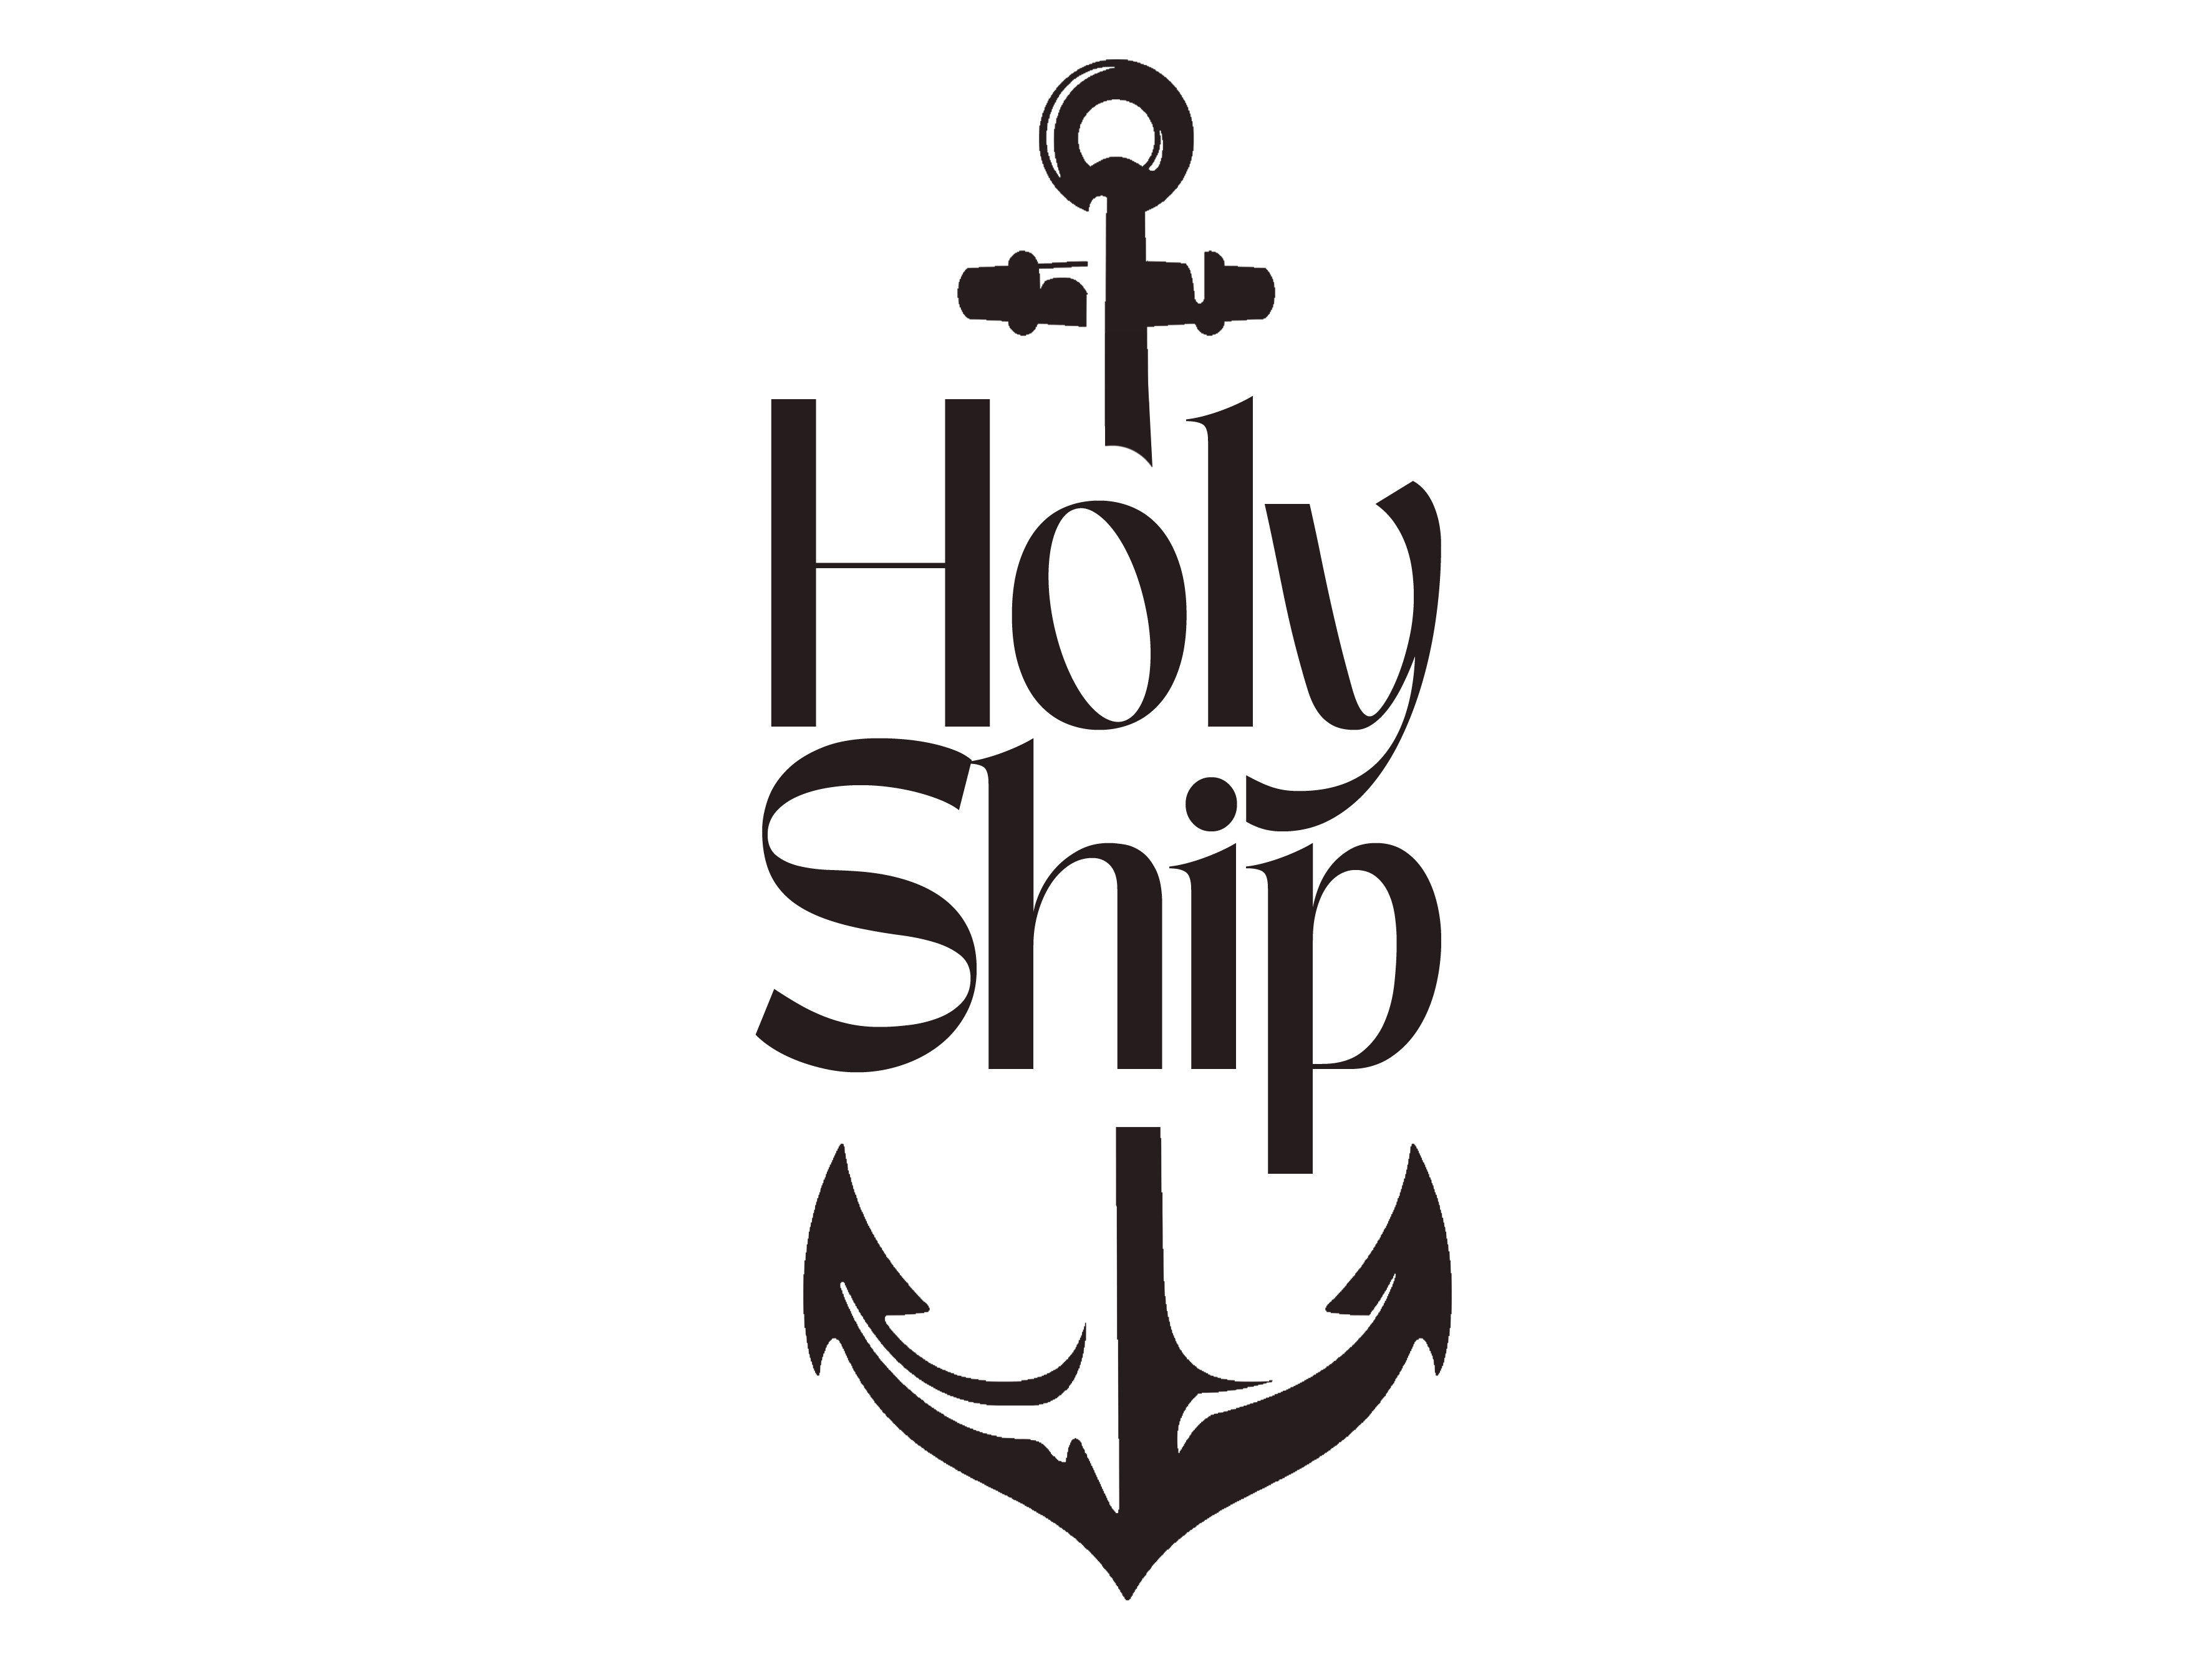 Holy Ship, Clothing, Apparell, Holy Ship Shirts, Bekleidung Holy Ship, Tshirt Holy Ship, Clothing Store, Bekleidung Store, DJ Bekleidung, Trend Bekleidung, KI;